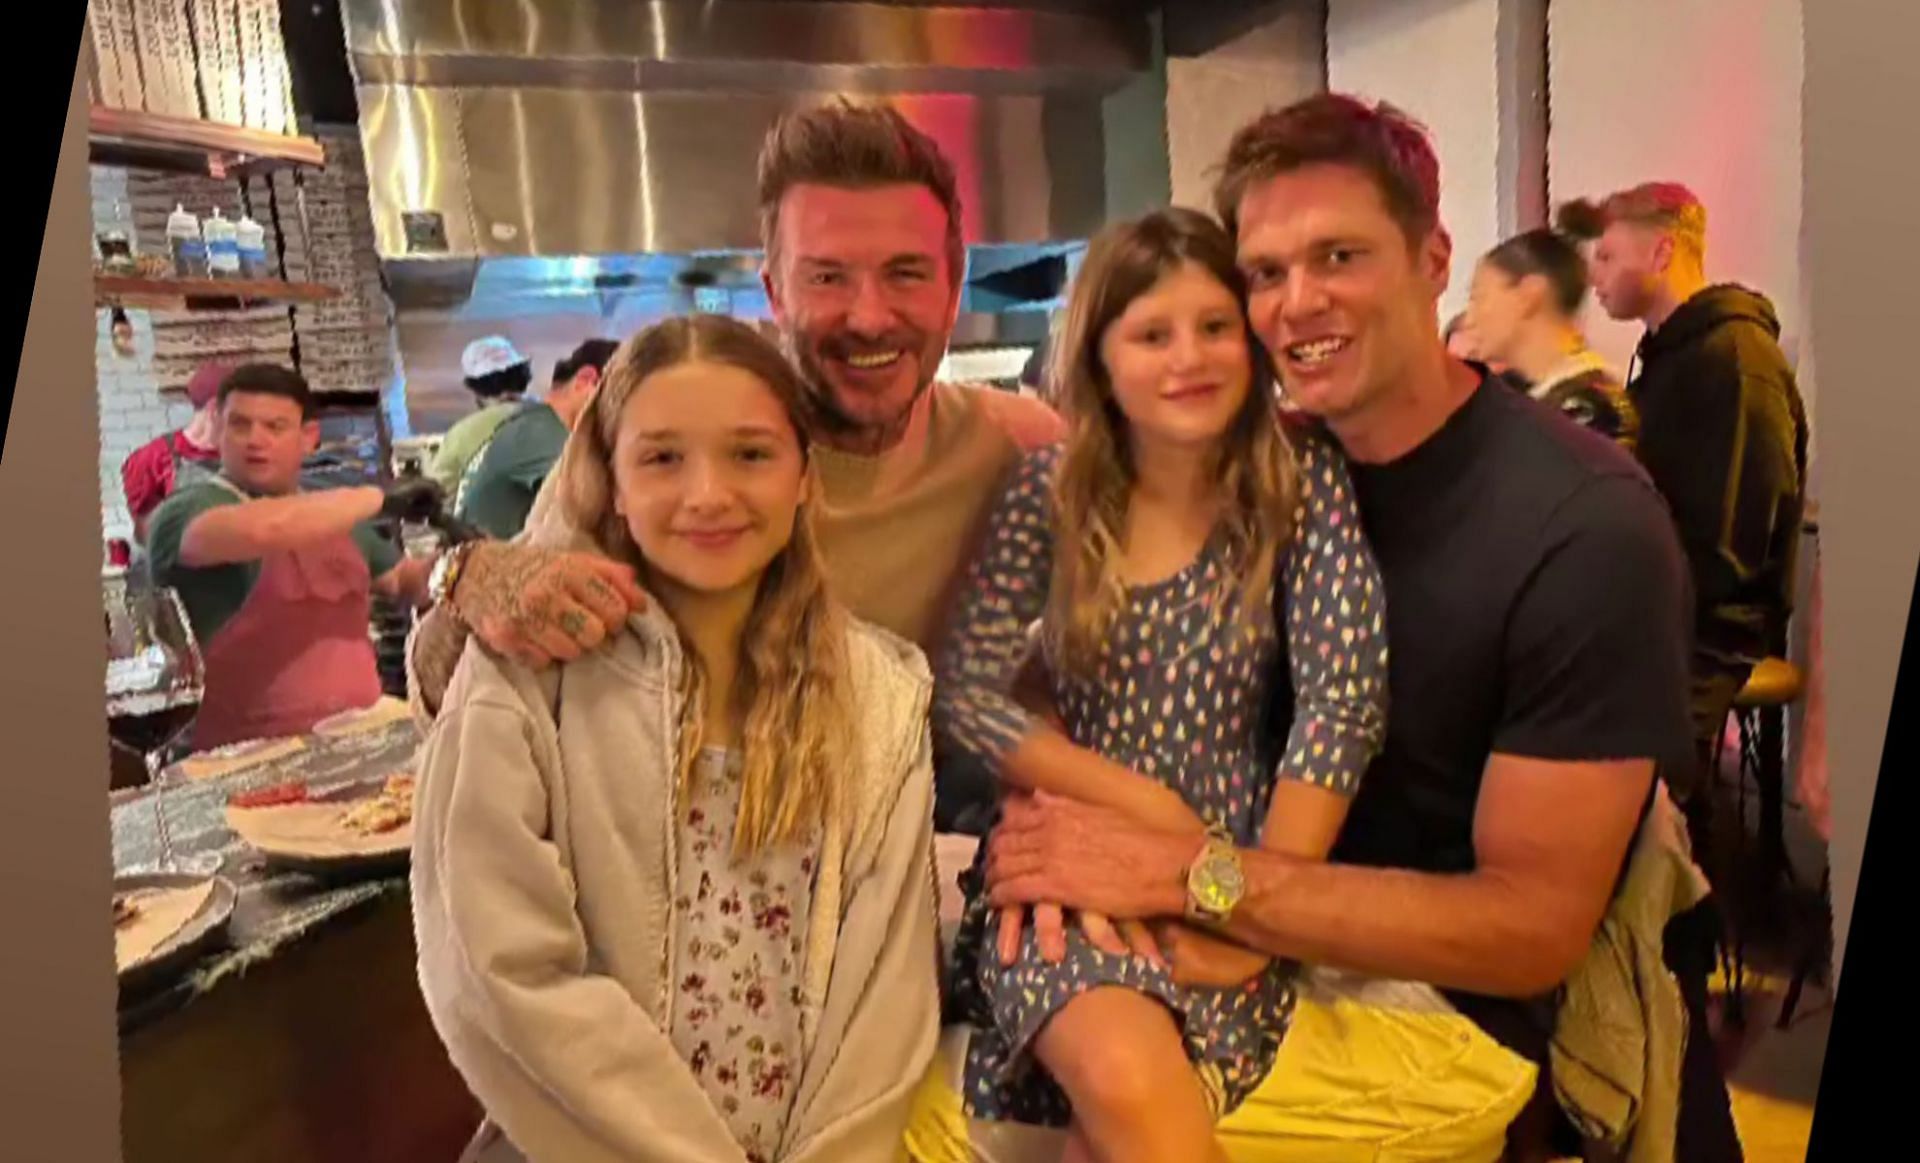 Tom Brady, David Beckham get together for father-daughter date 